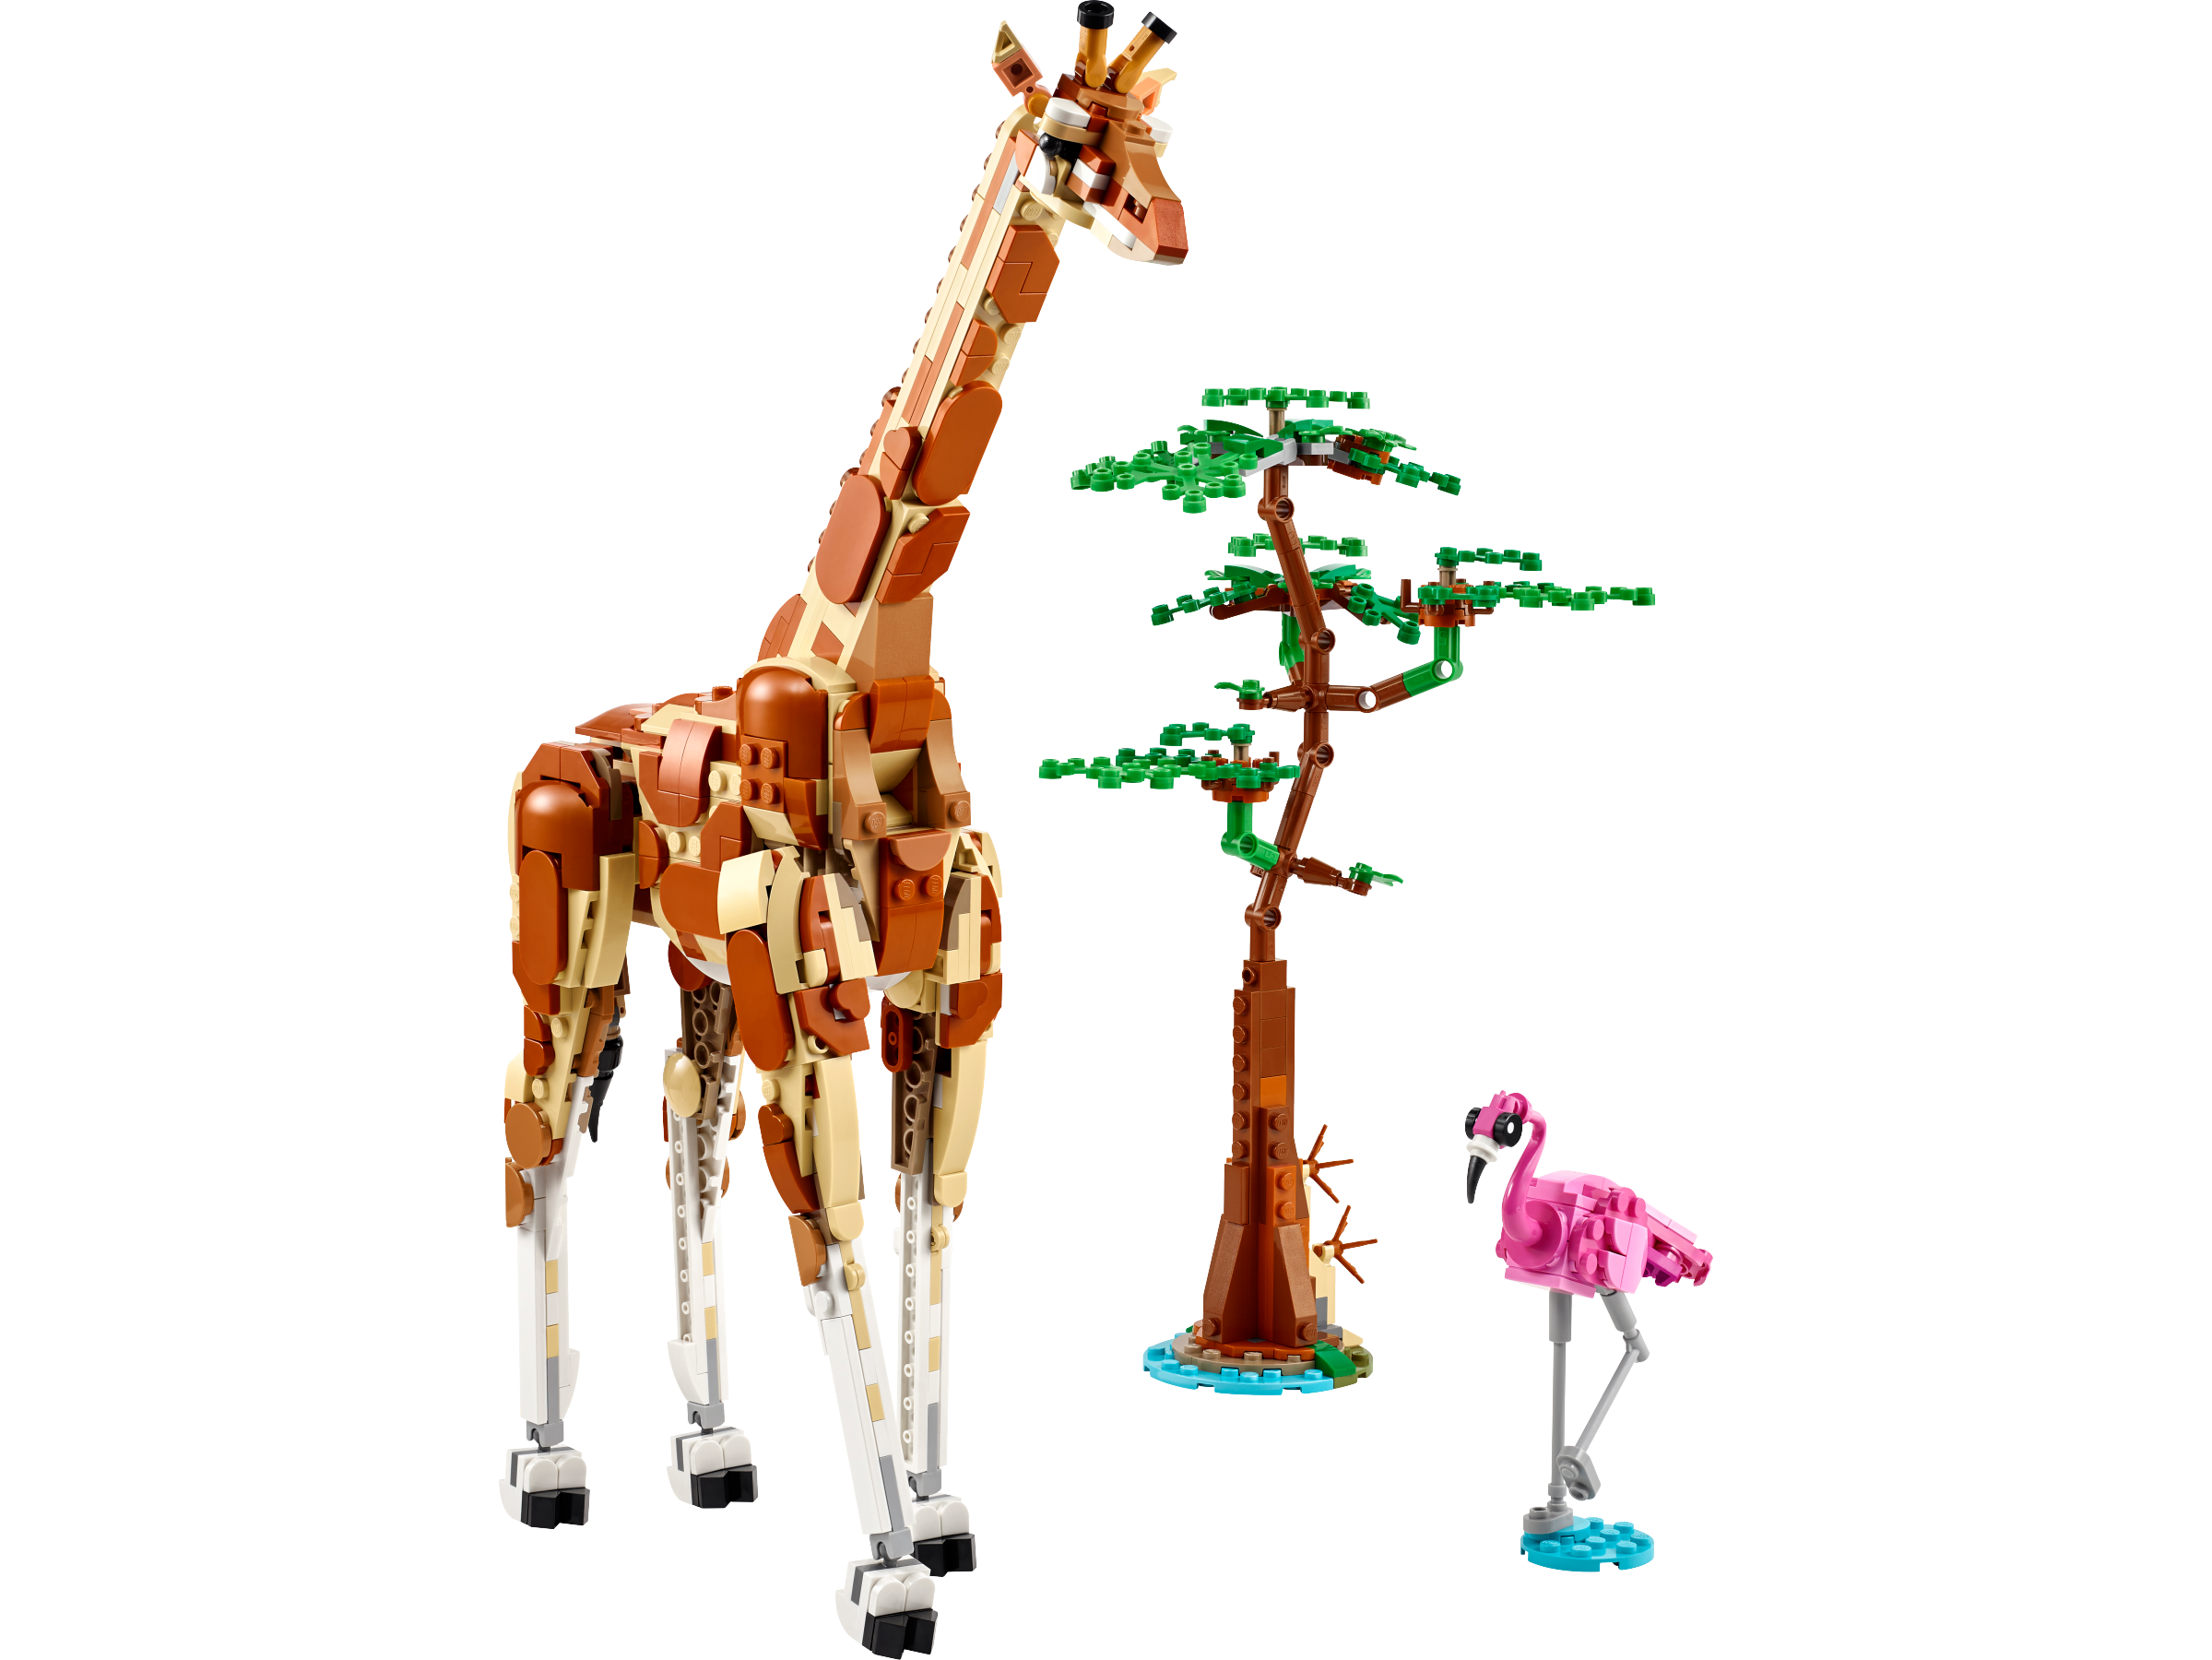 Lego 31150 Wild Safari Animals